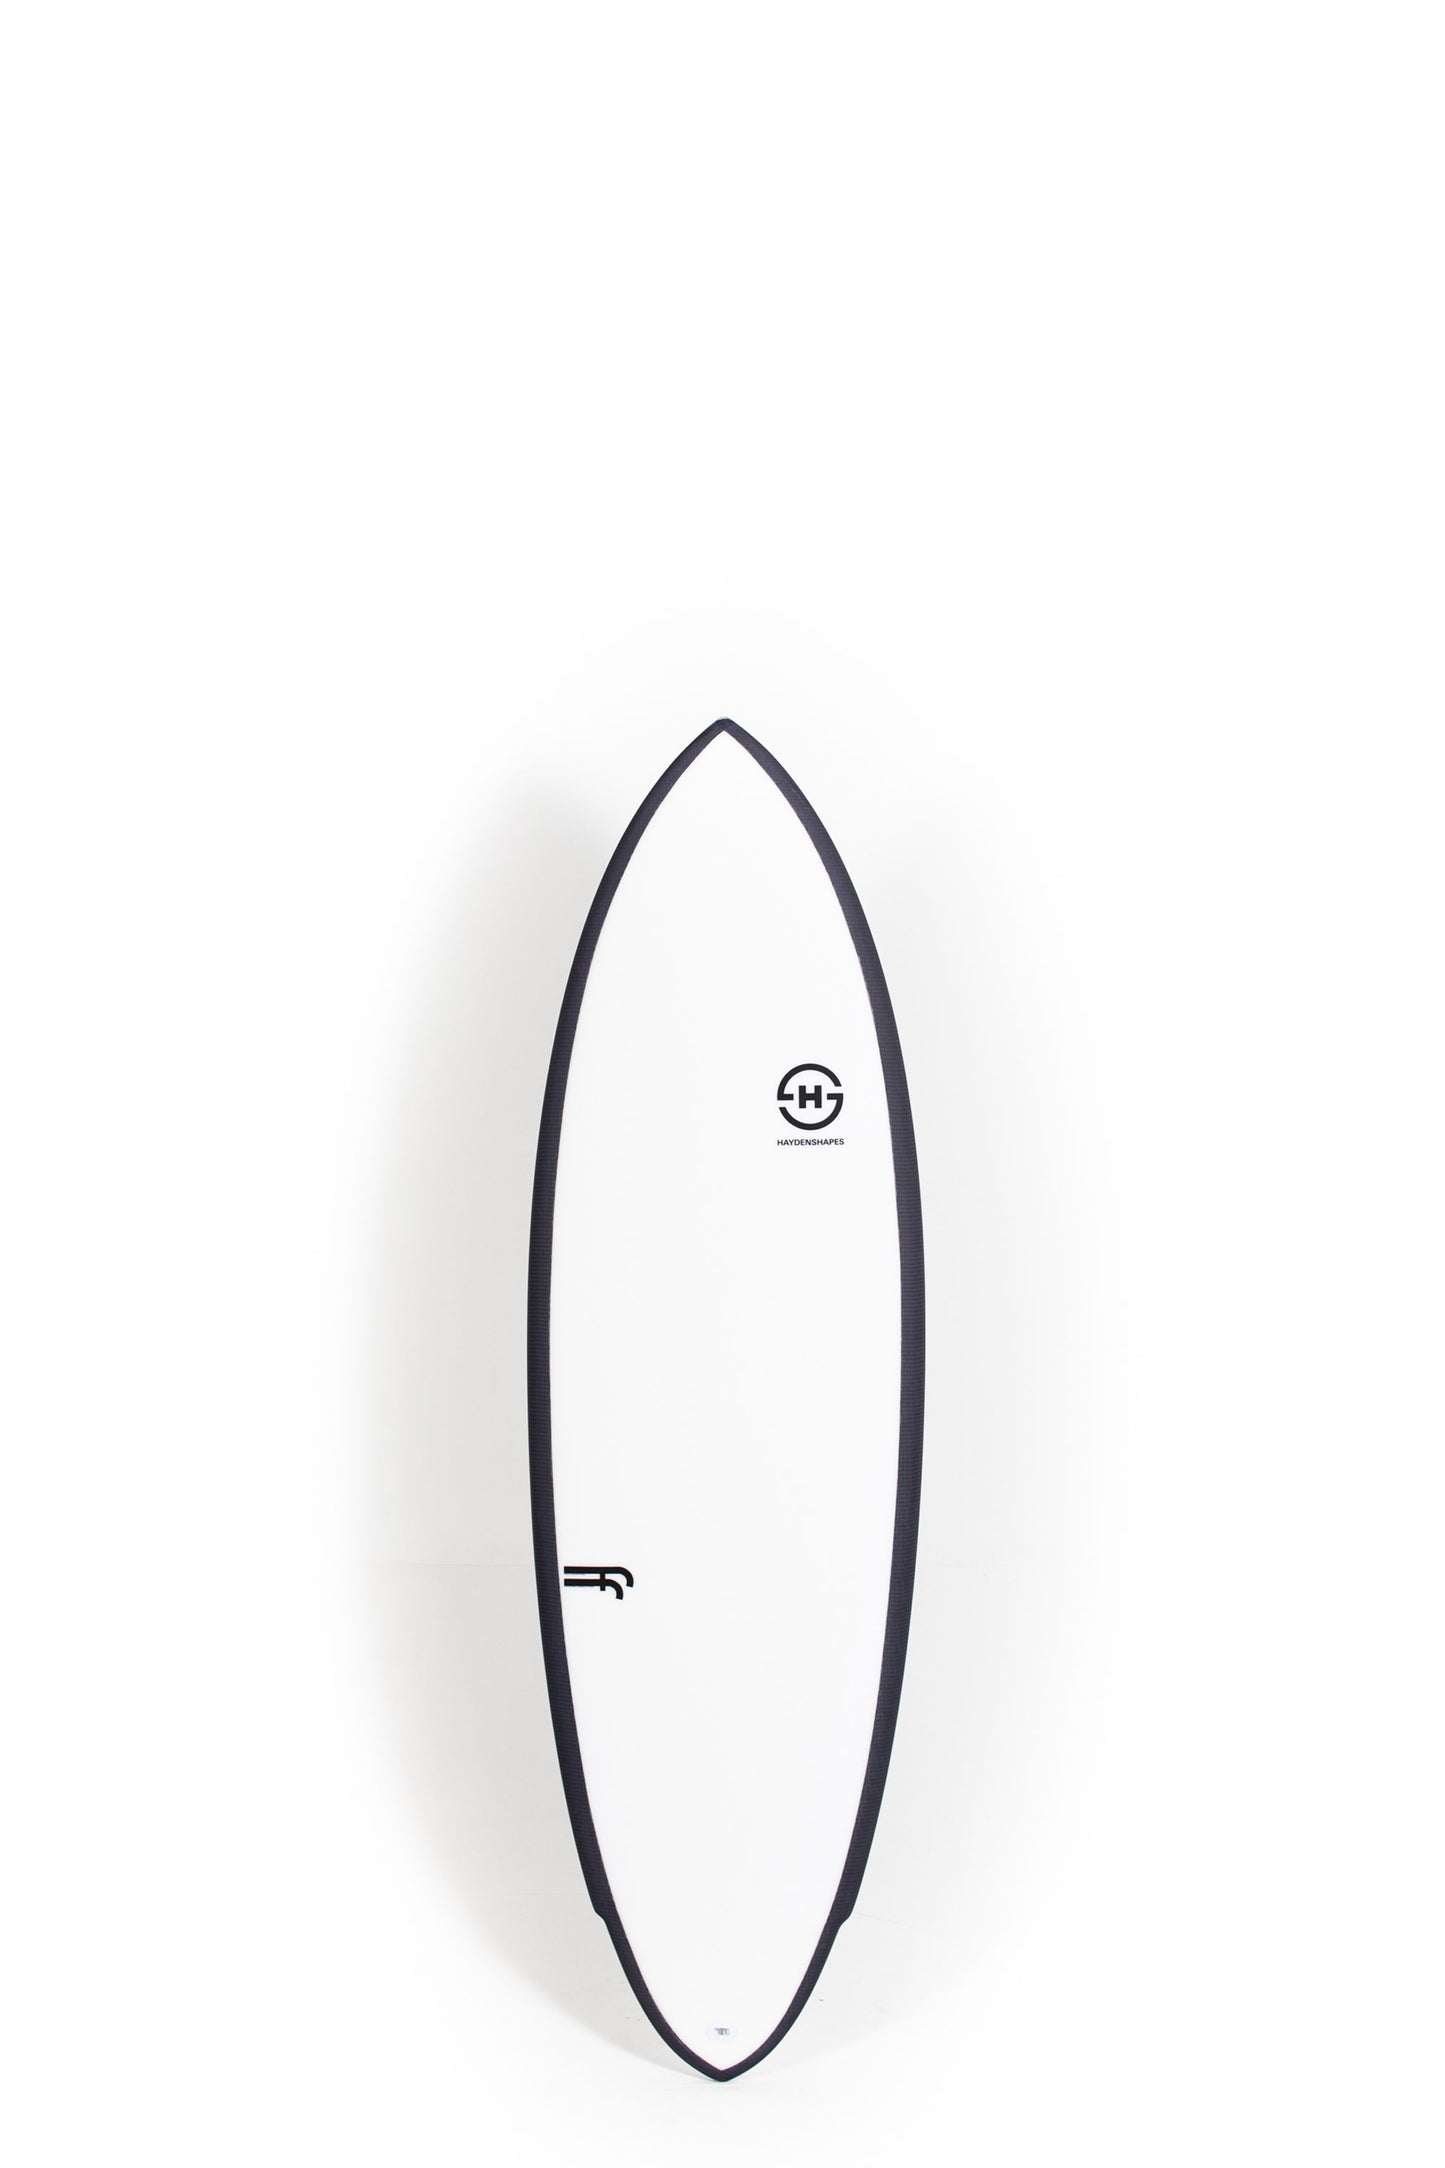 Pukas Surf Shop - Haydenshapes Surfboard - HYPTO KRYPTO TWIN PIN - 5'10" X 20 3/16" X 2 9/16" - 33.14L